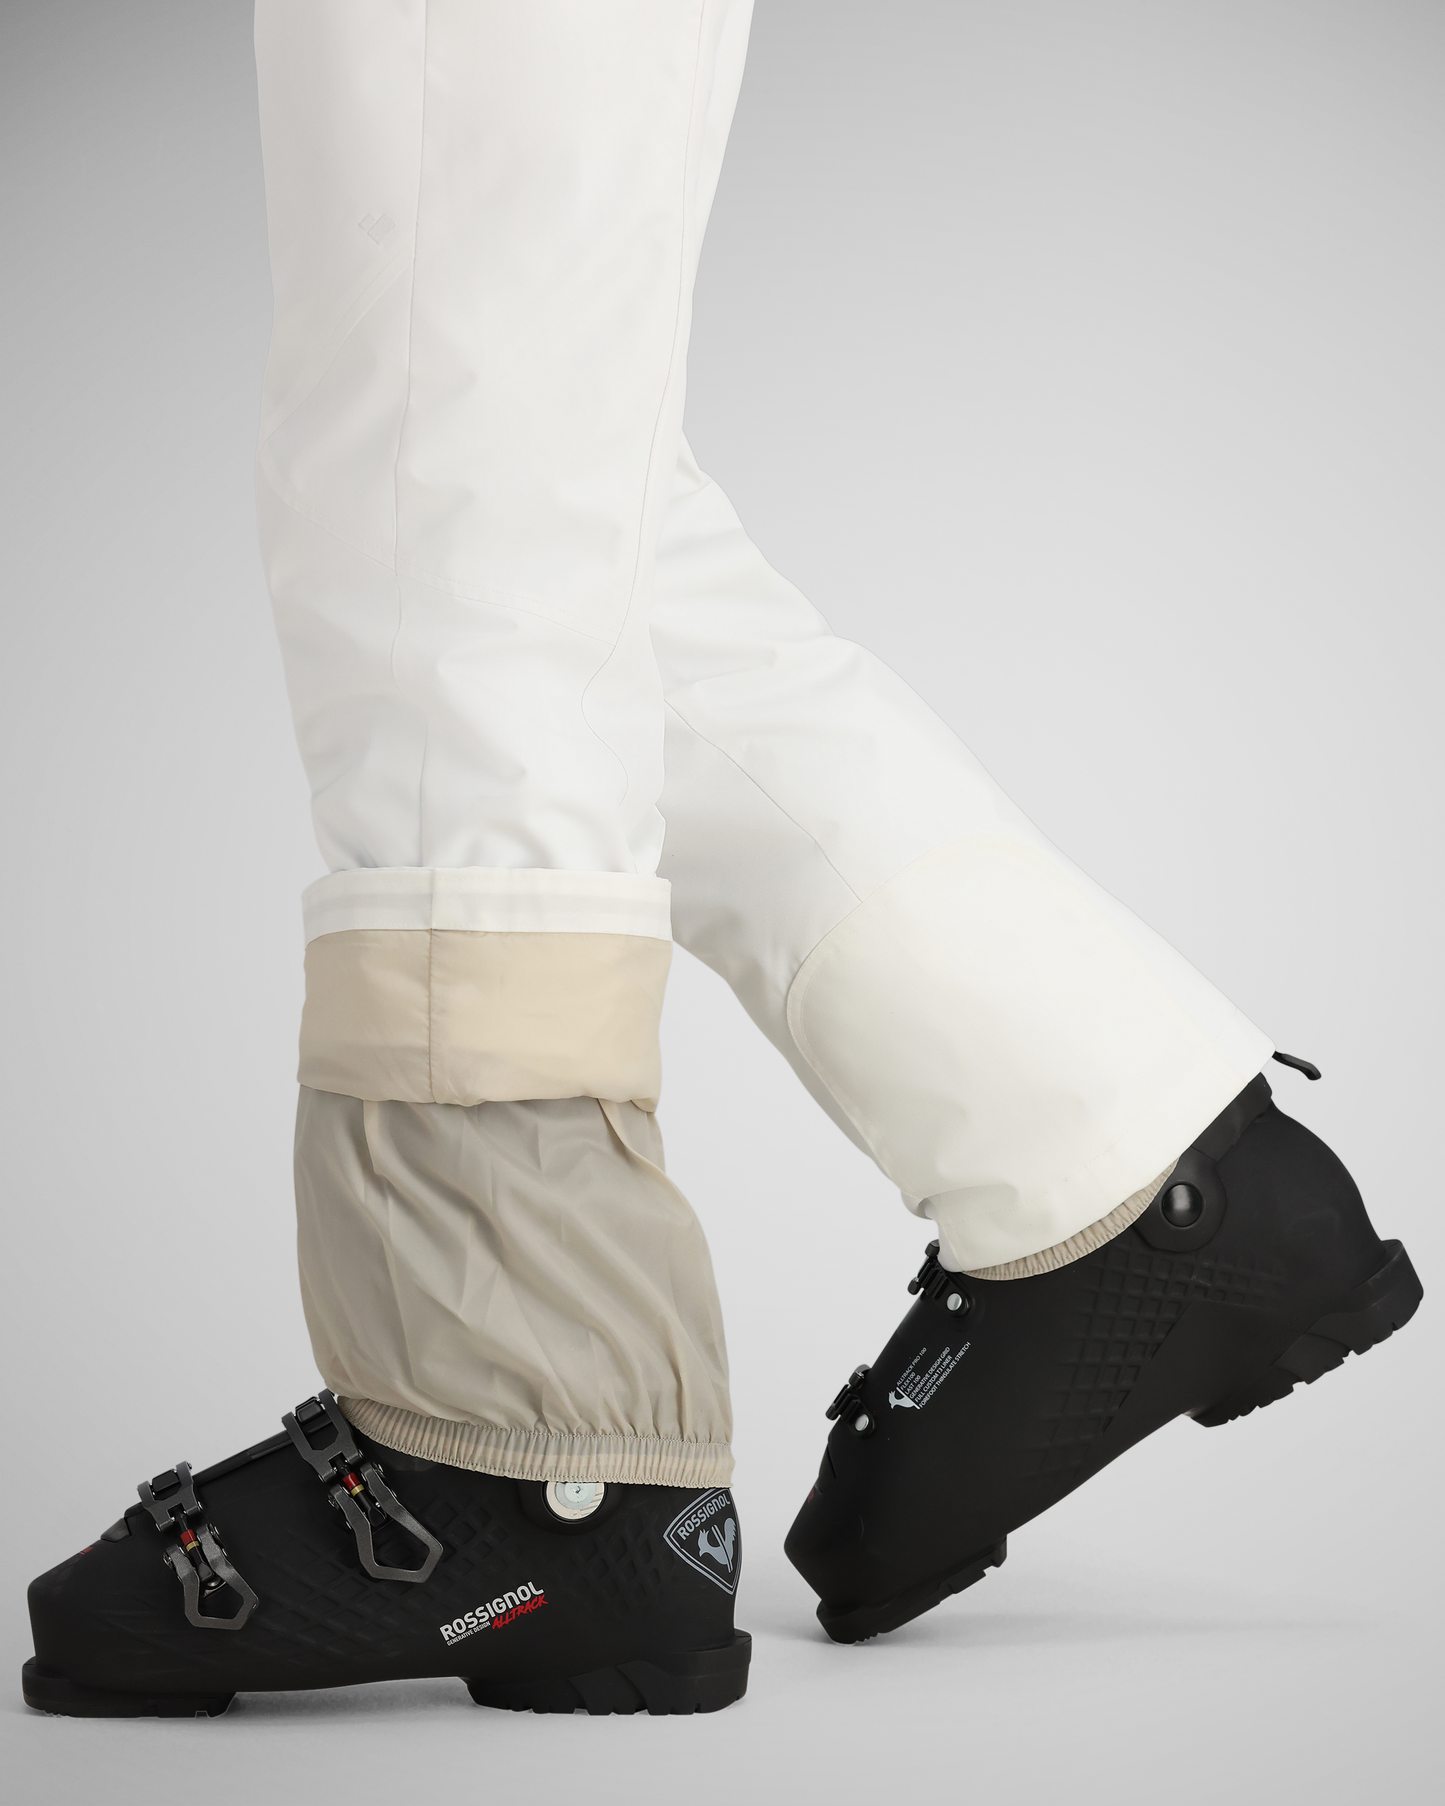 Powder Cuffs | Water-resistant powder cuffs with gripper elastic